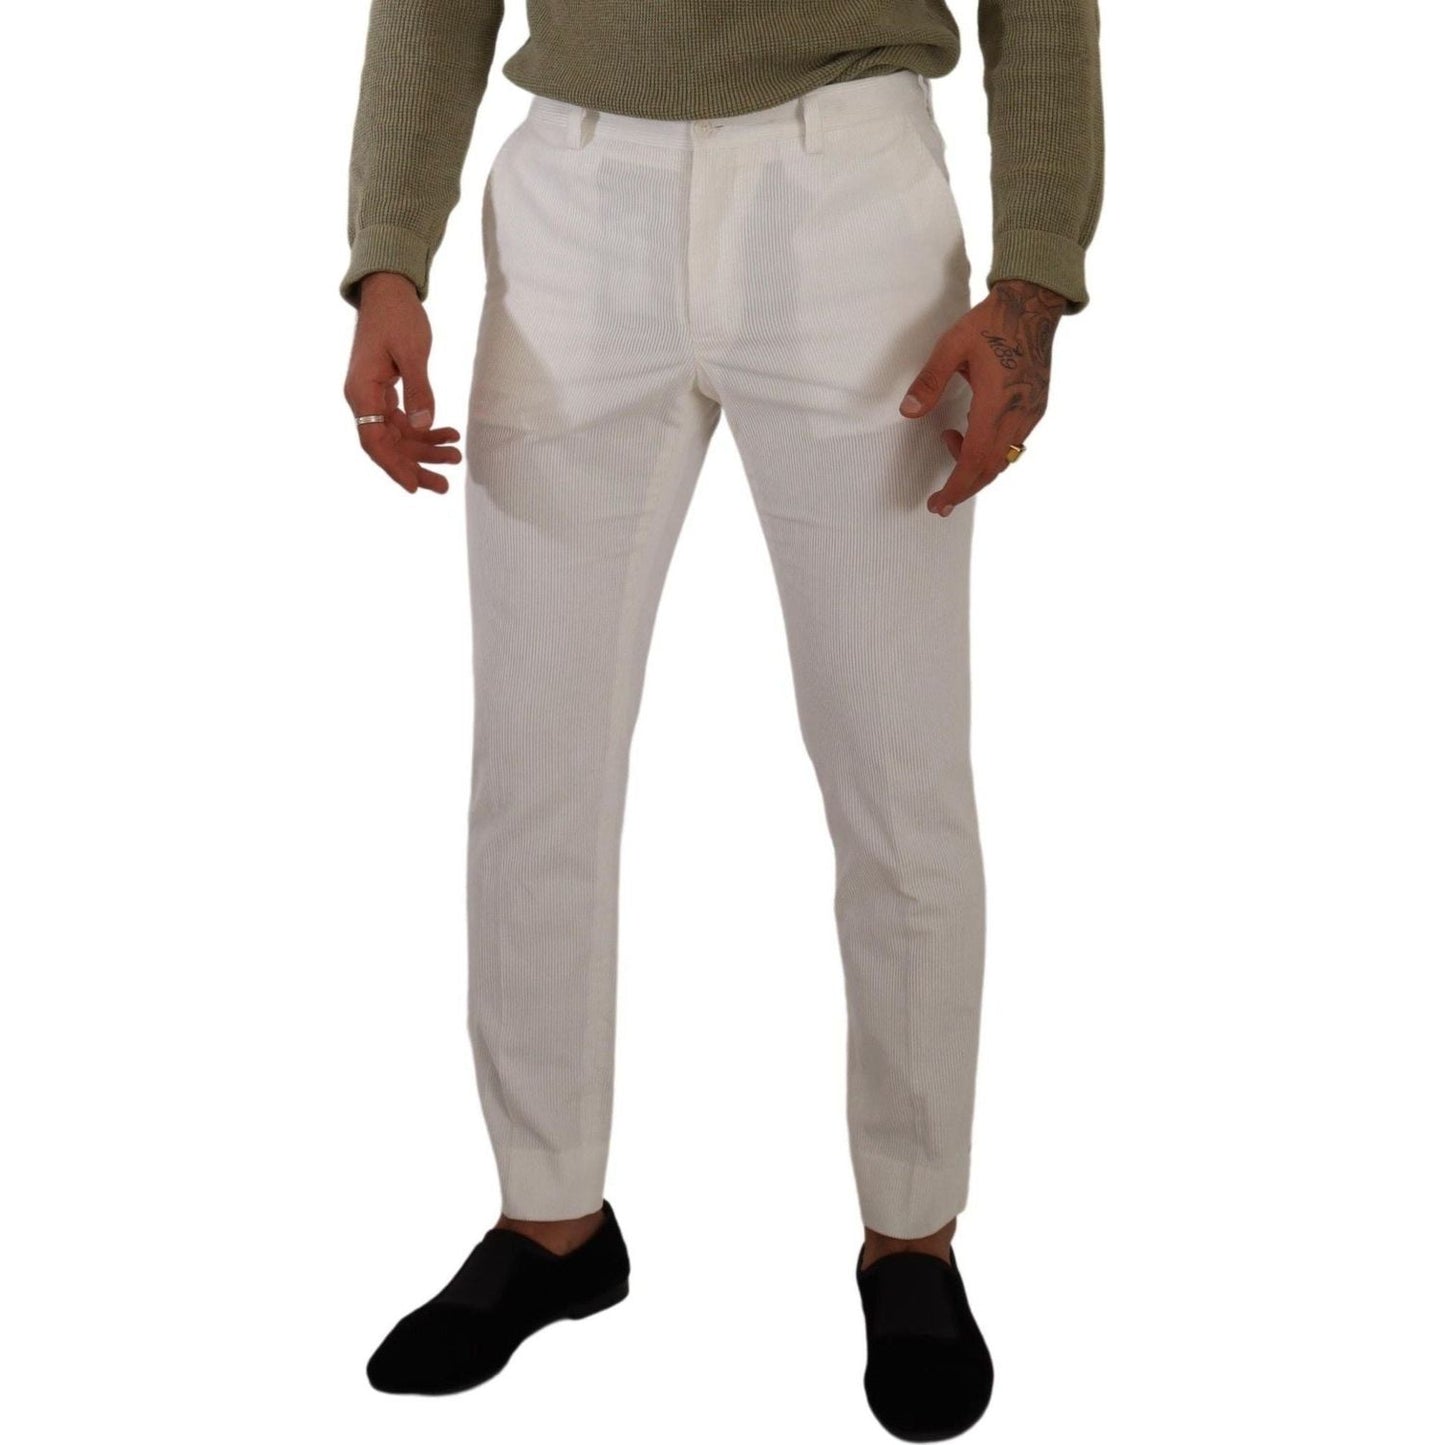 Dolce & Gabbana Elegant Slim Fit Cotton Trousers white-cotton-skinny-corduroy-trouser-pants IMG_6597-c9e764a5-a46.jpg